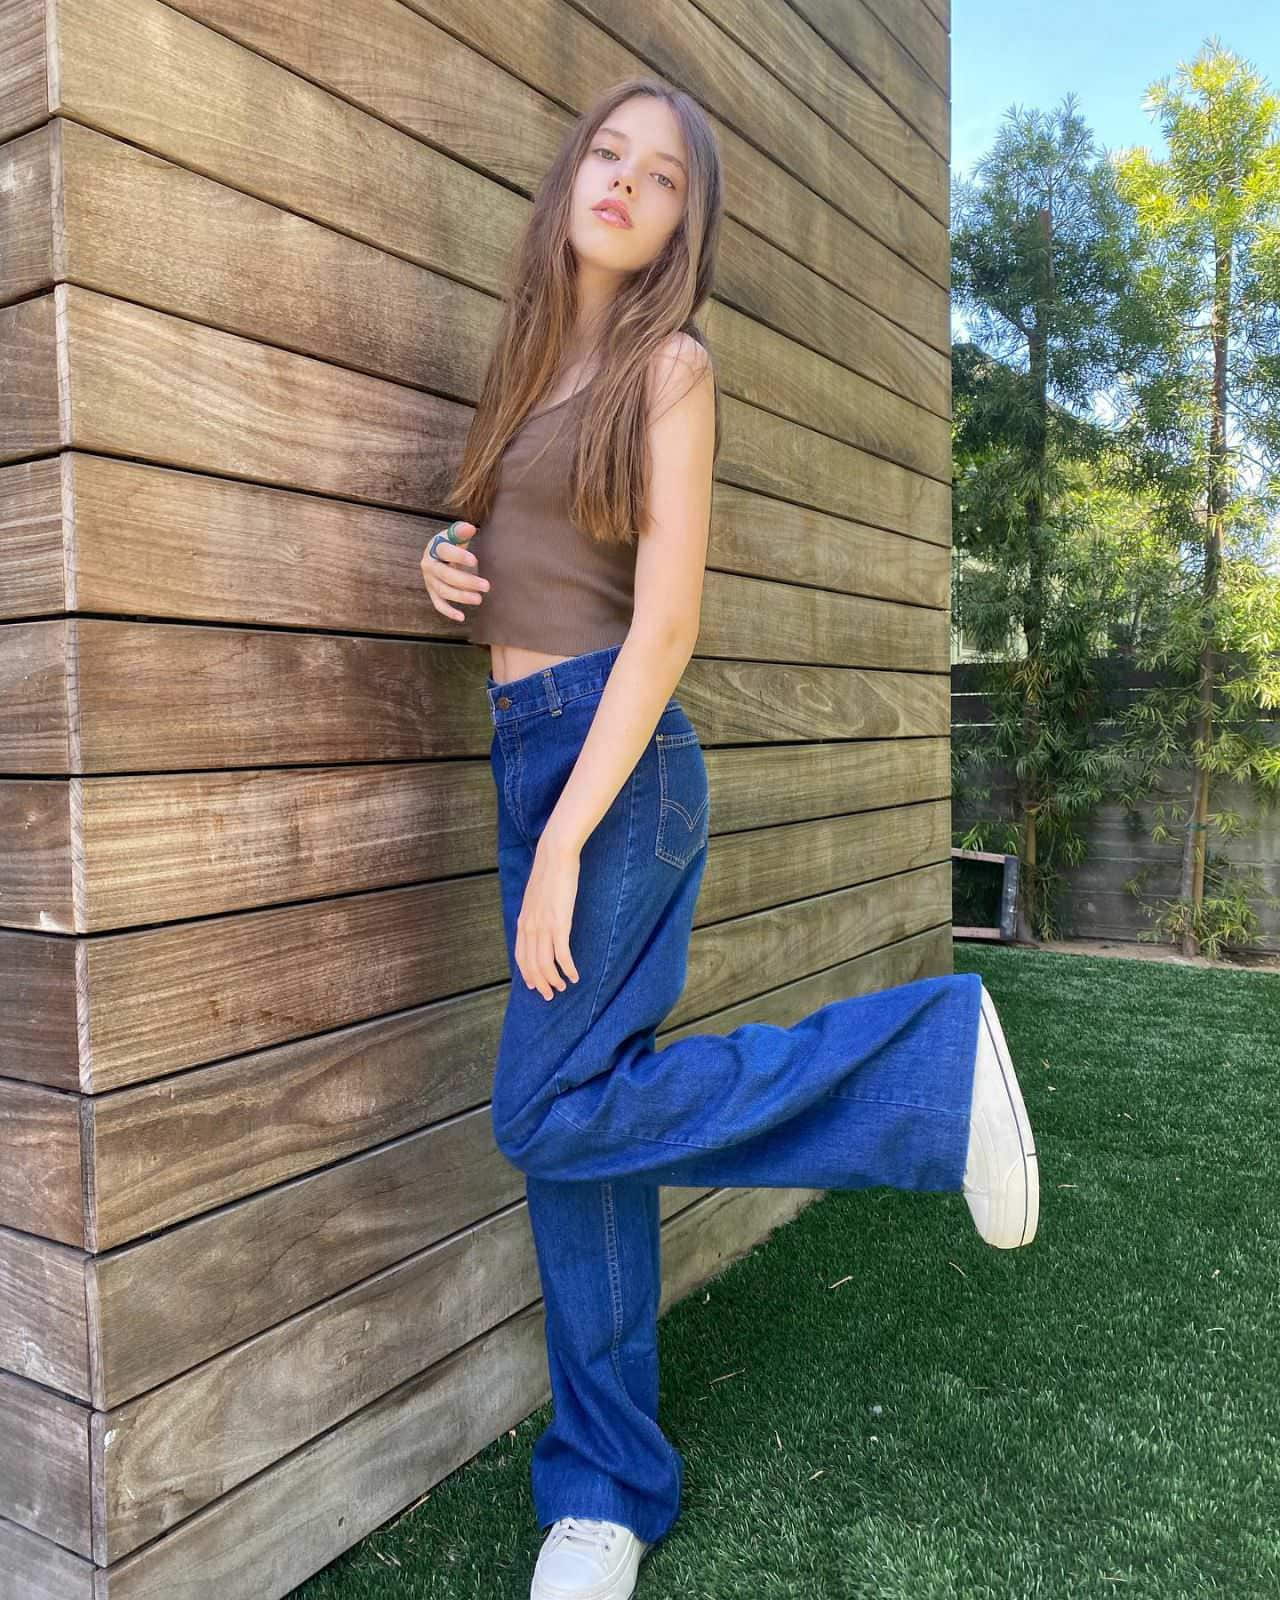 Maisie de Krassel Posing in Chic Outfit on Instagram